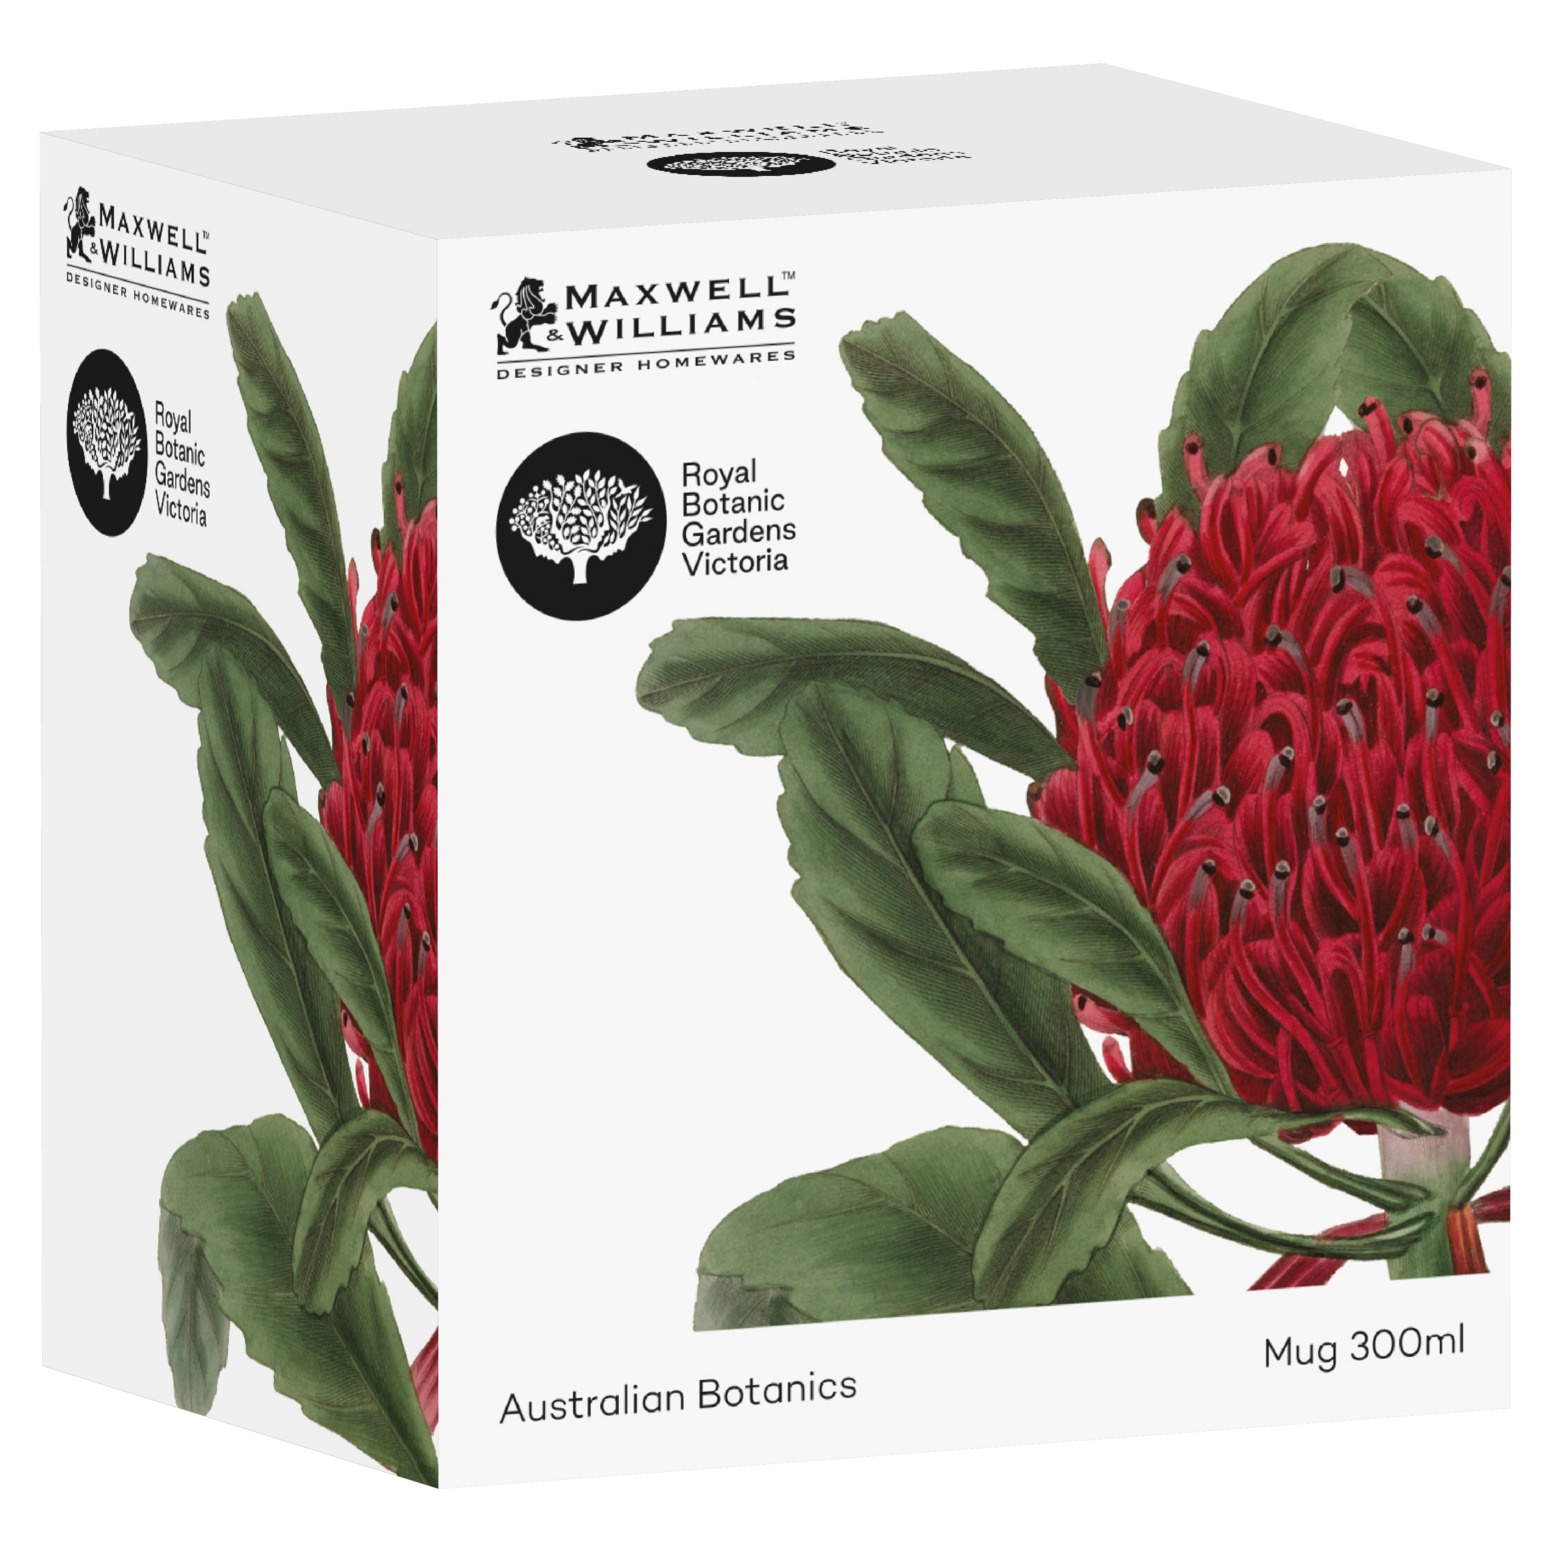 Maxwell Williams Royal Botanic Gardens Australian Botanics Mug Telopea 300ML Gift Boxed